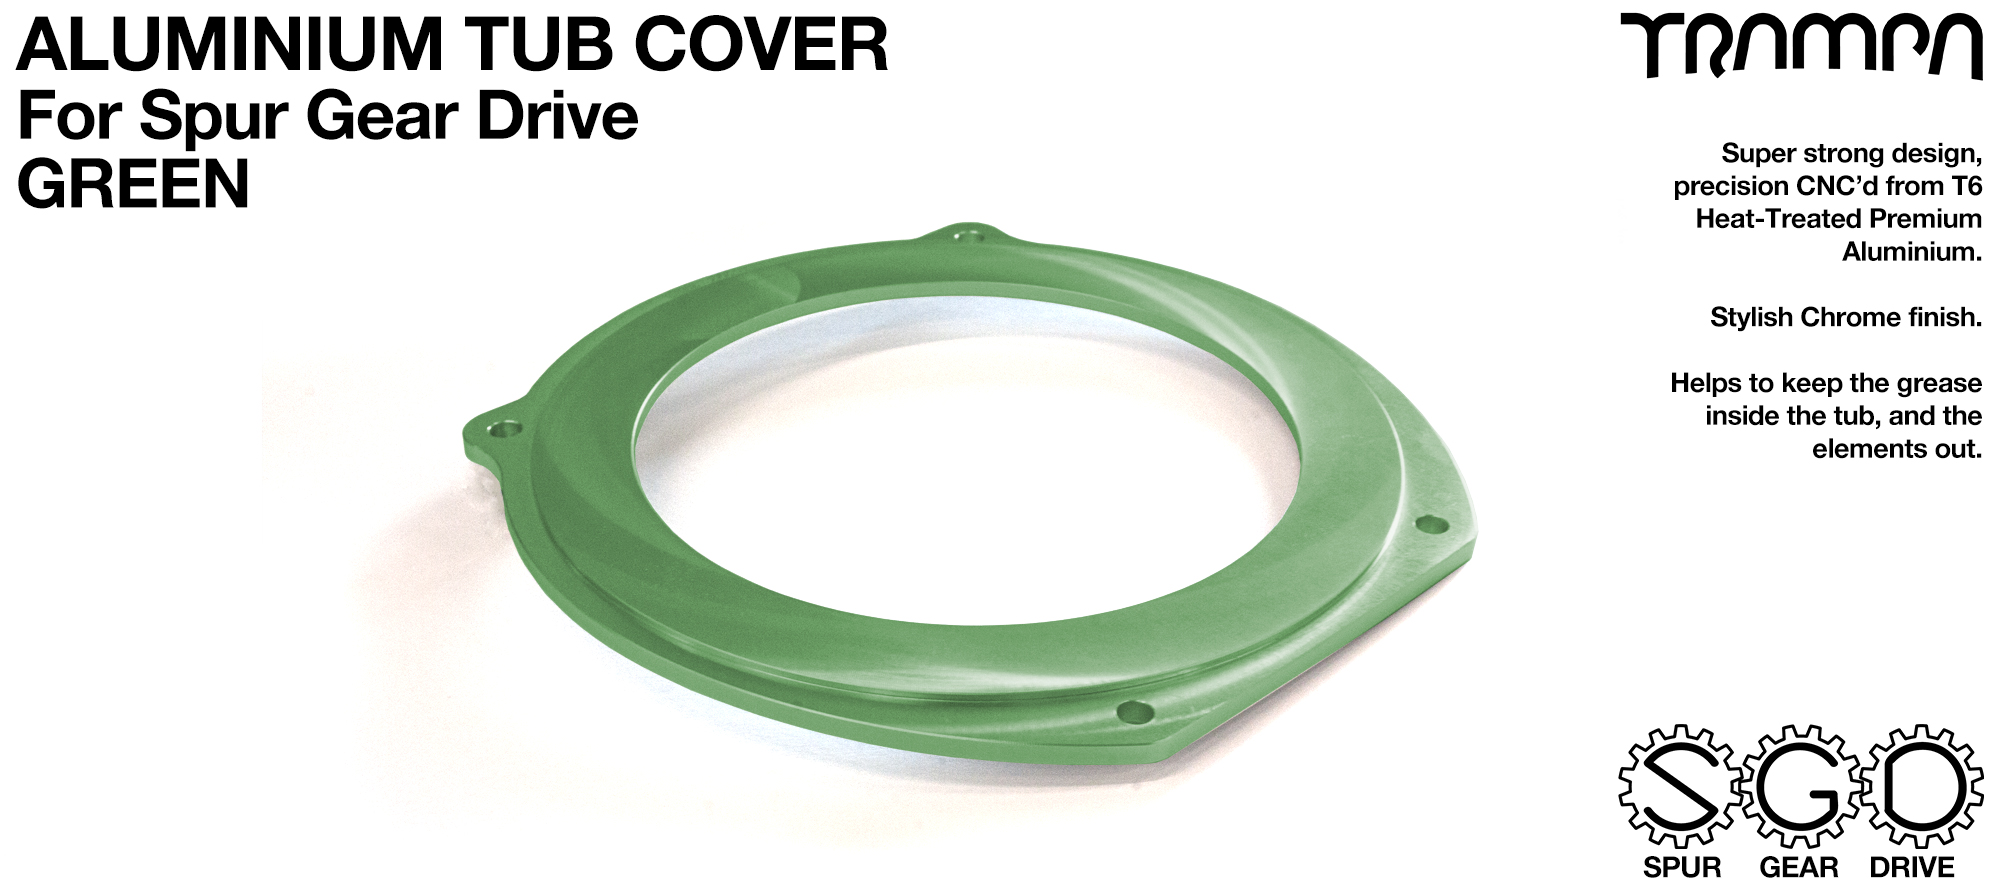 TRAMPA SPUR Gear Drive T6 Aluminium Tub Cover - GREEN